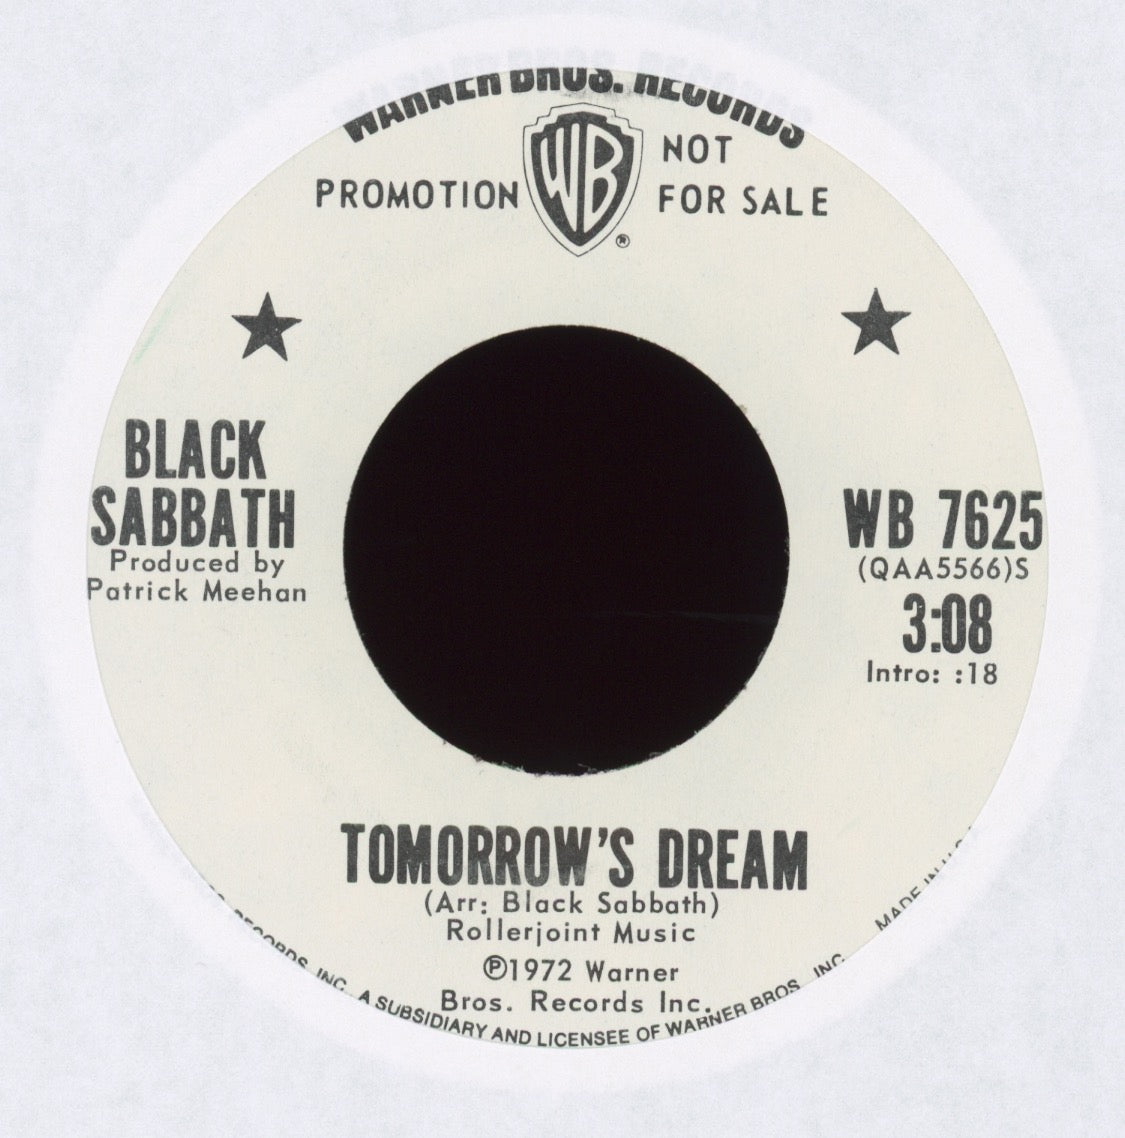 Black Sabbath - Tomorrow's Dream on WB Promo